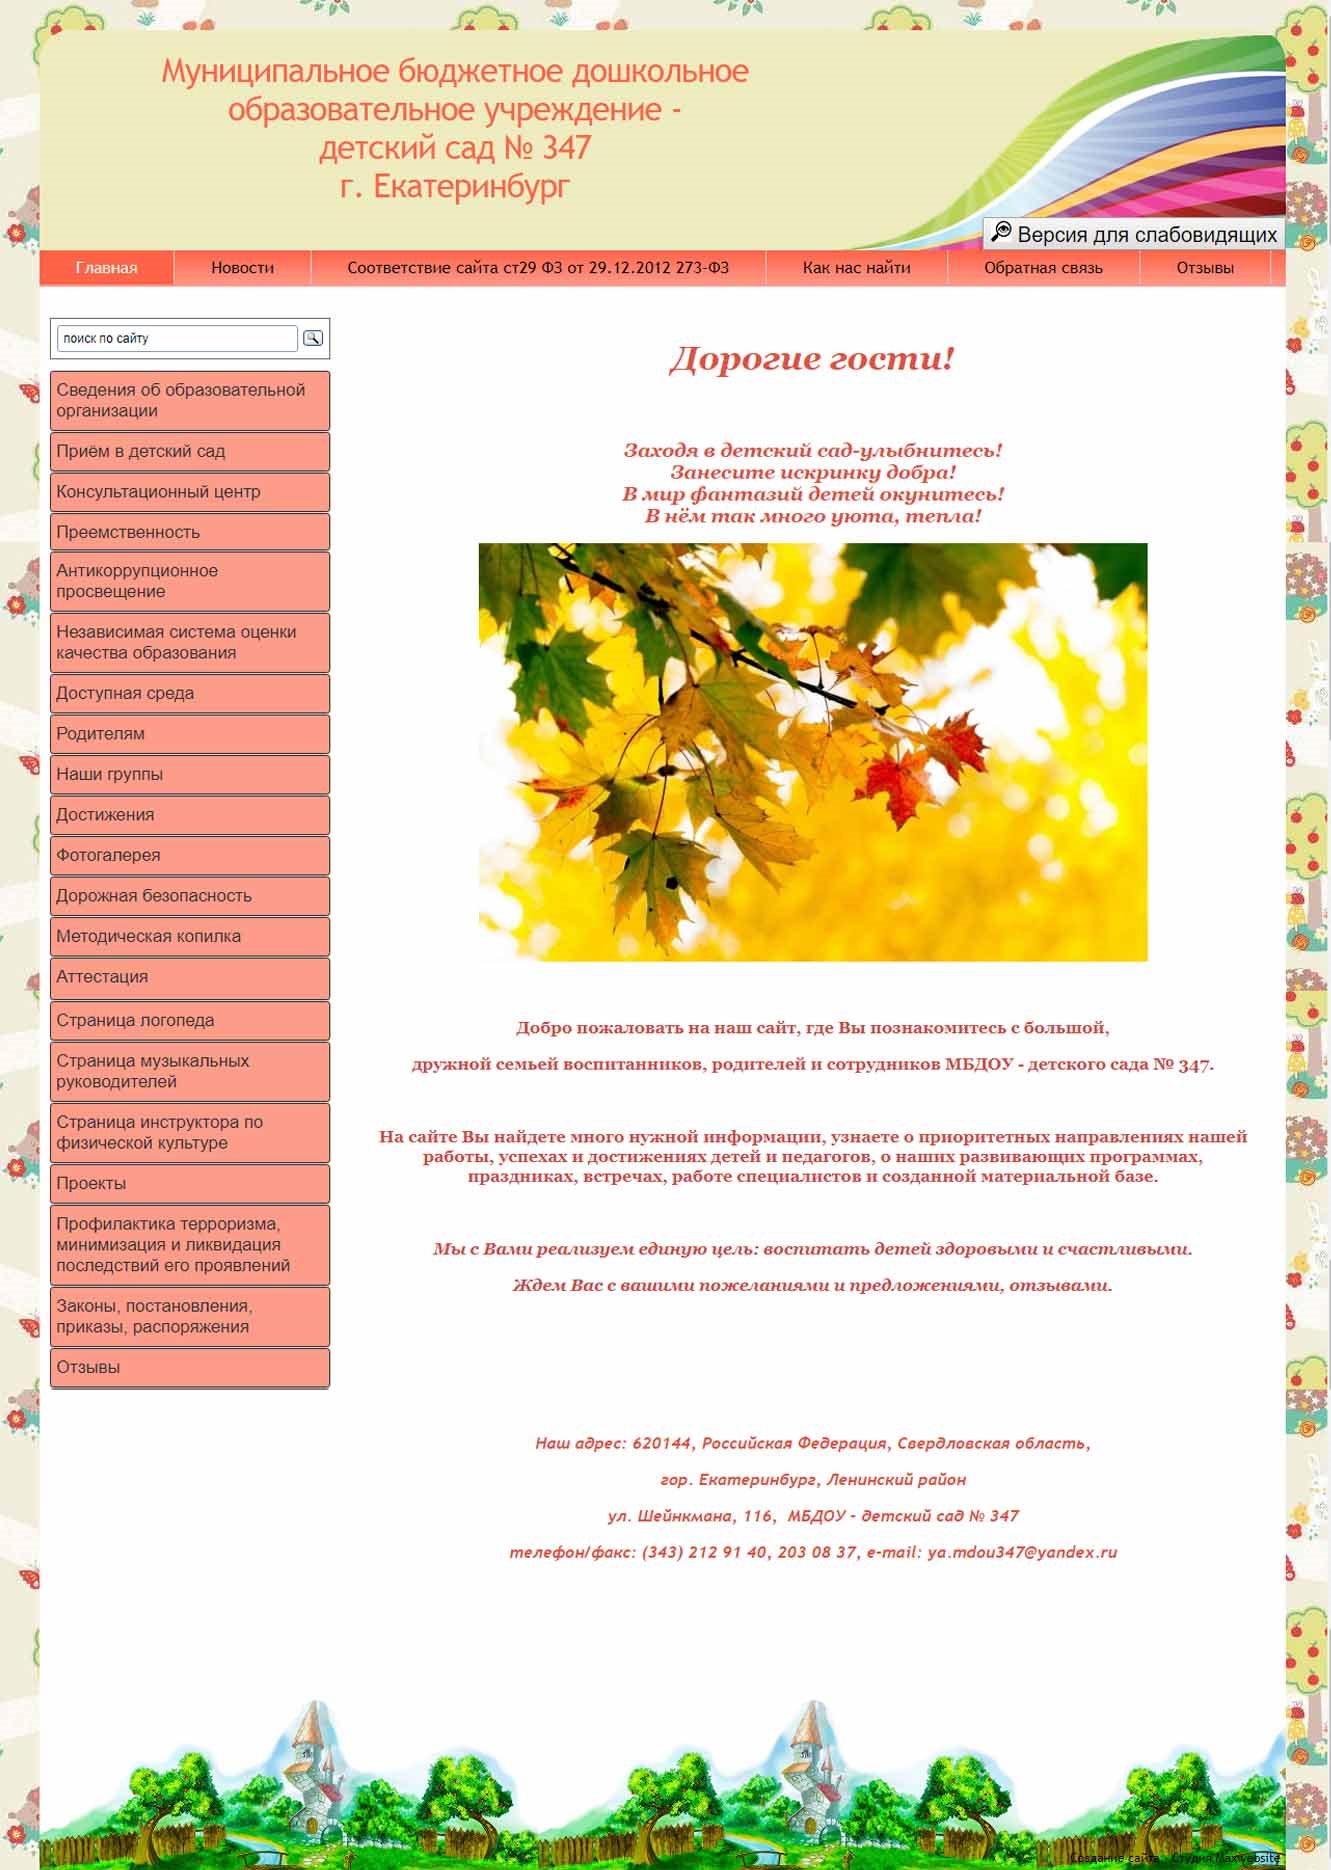 Сайт детского сада г.Екатеринбурга